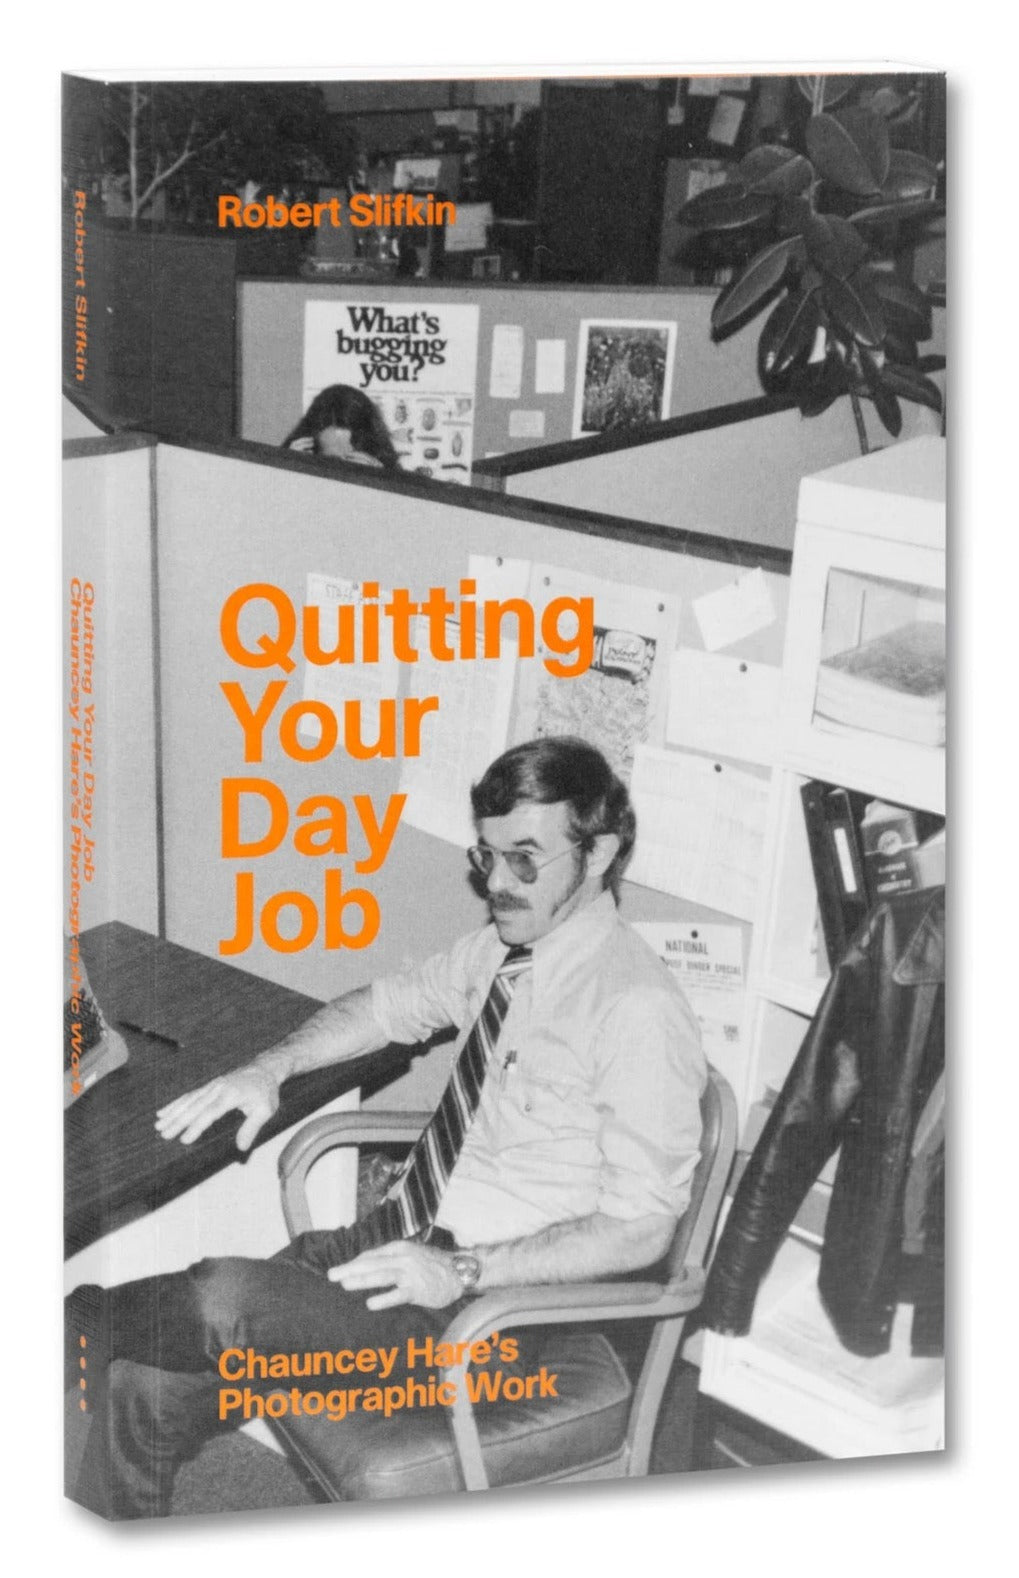 Robert Slifkin - Quitting Your Day Job: Chauncey Hare’s Photographic Work